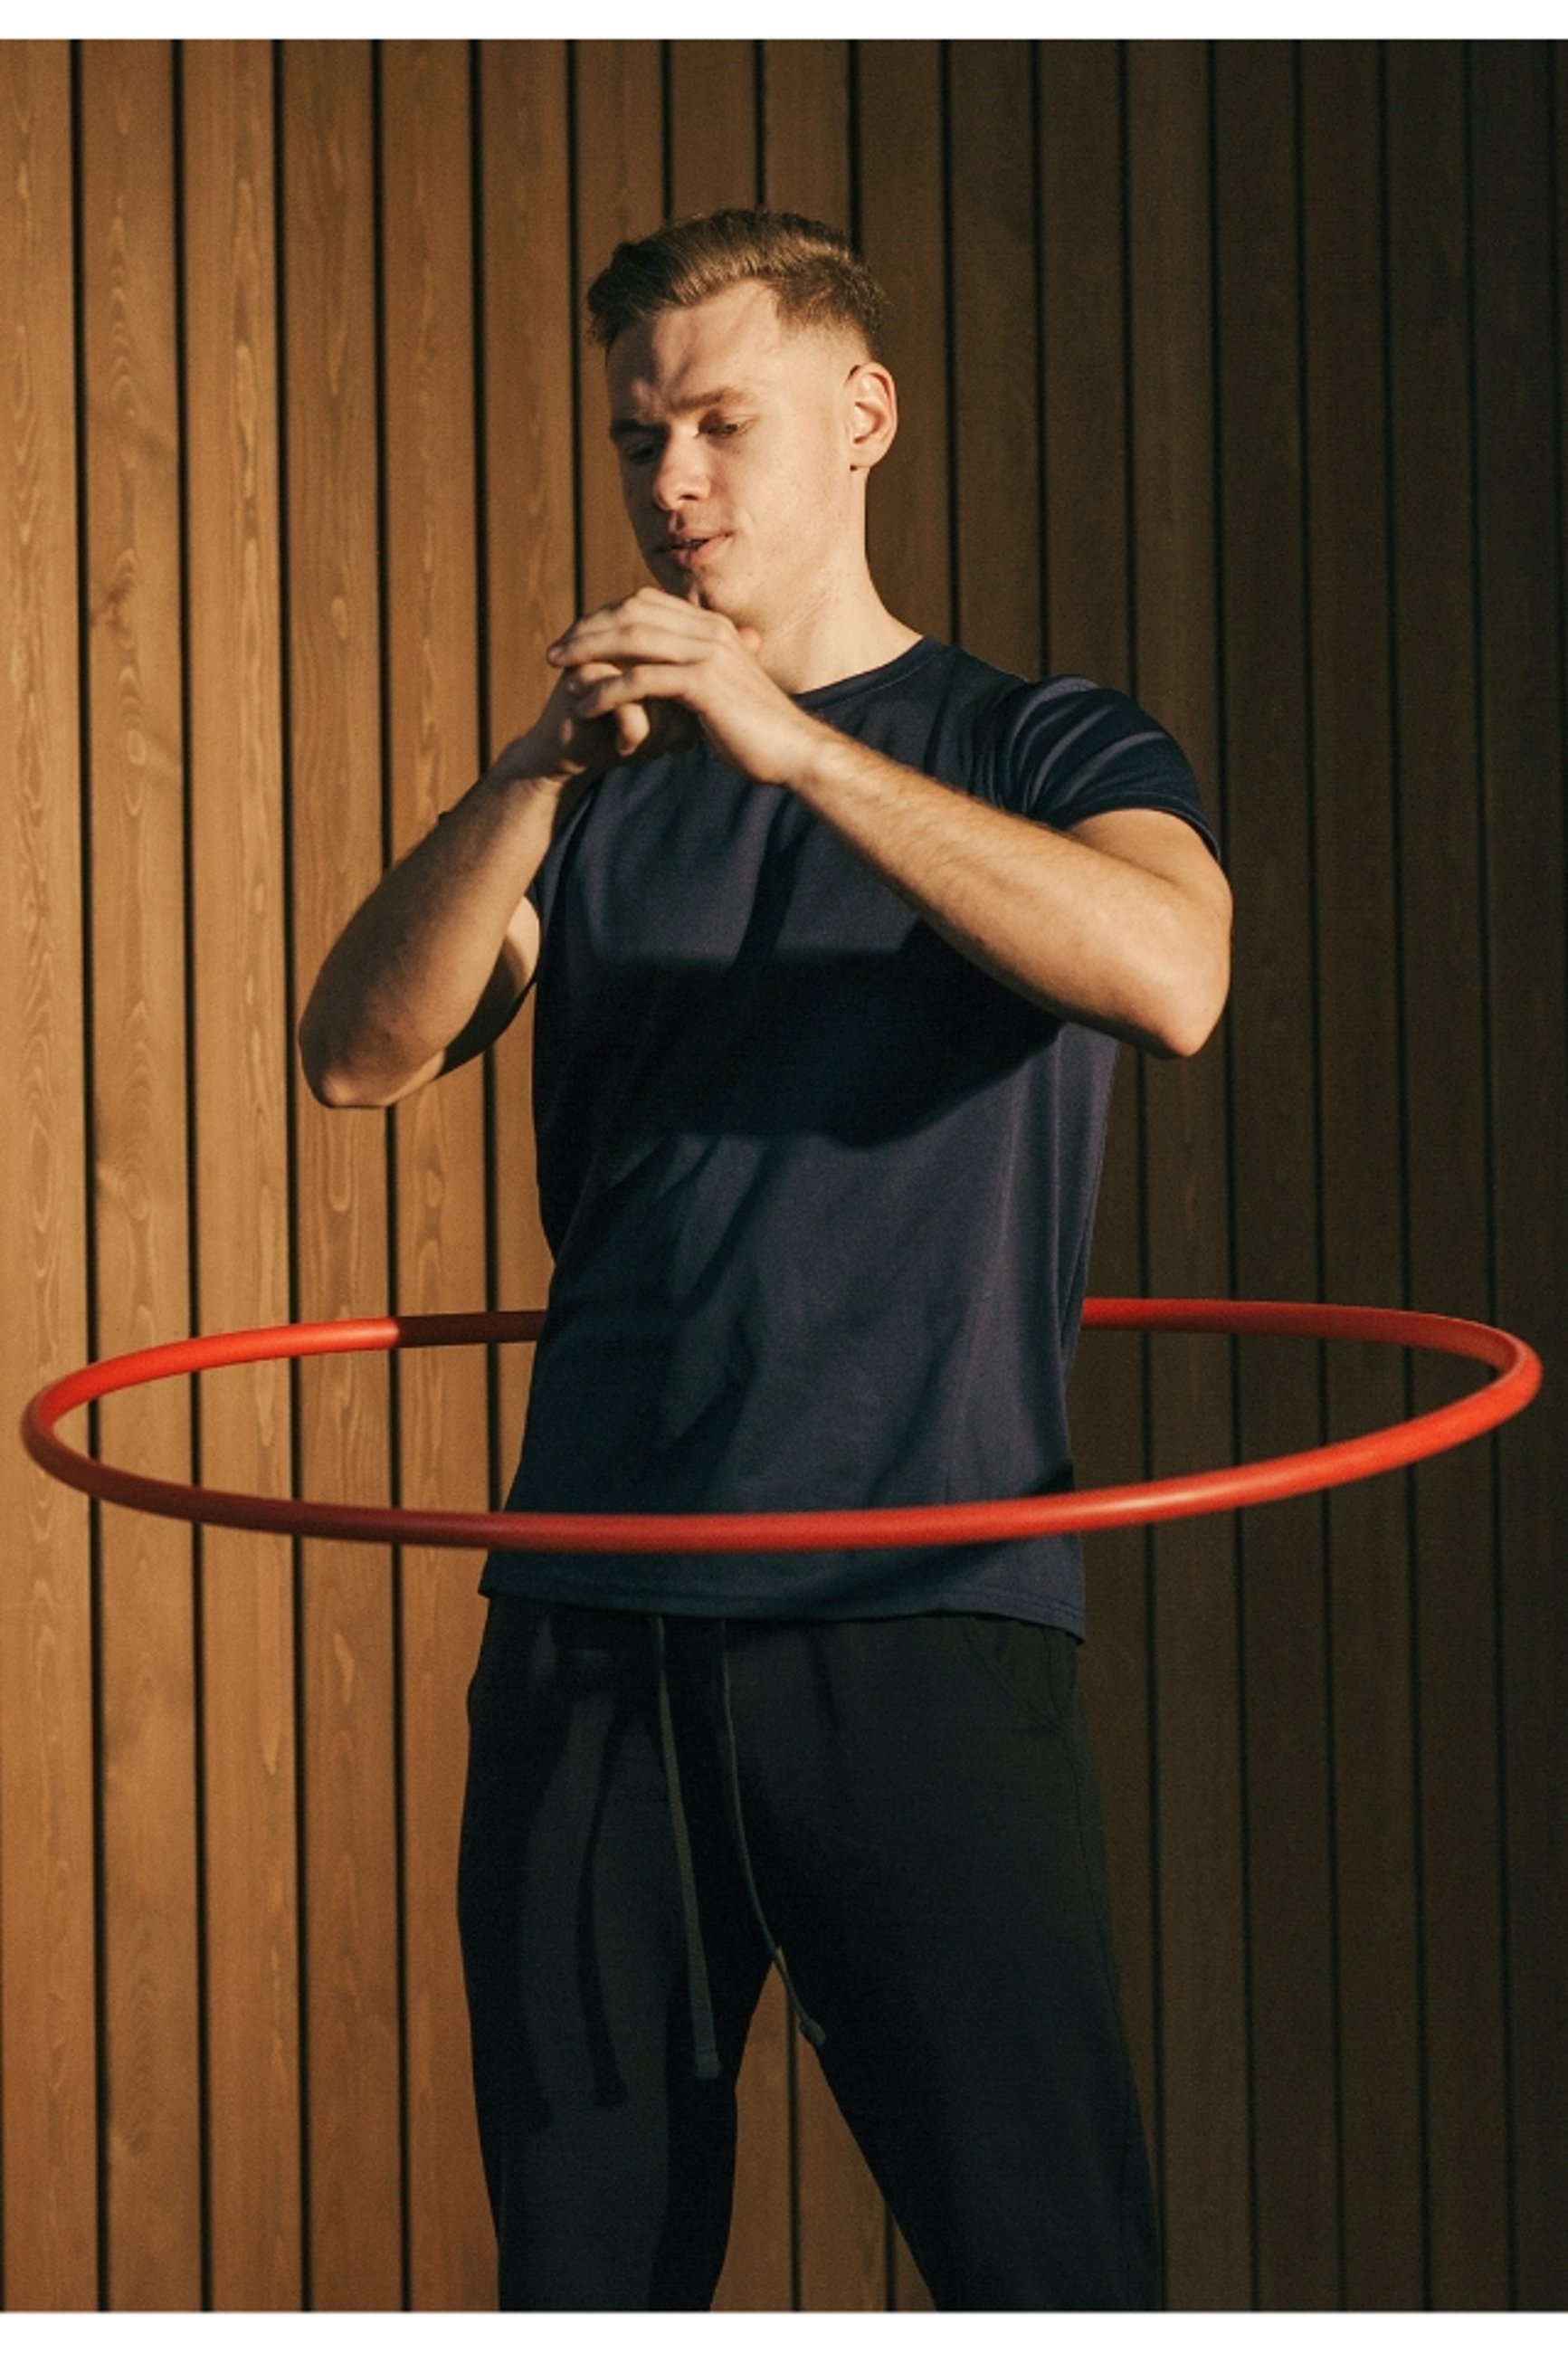 muž cvičí s hula-hoop